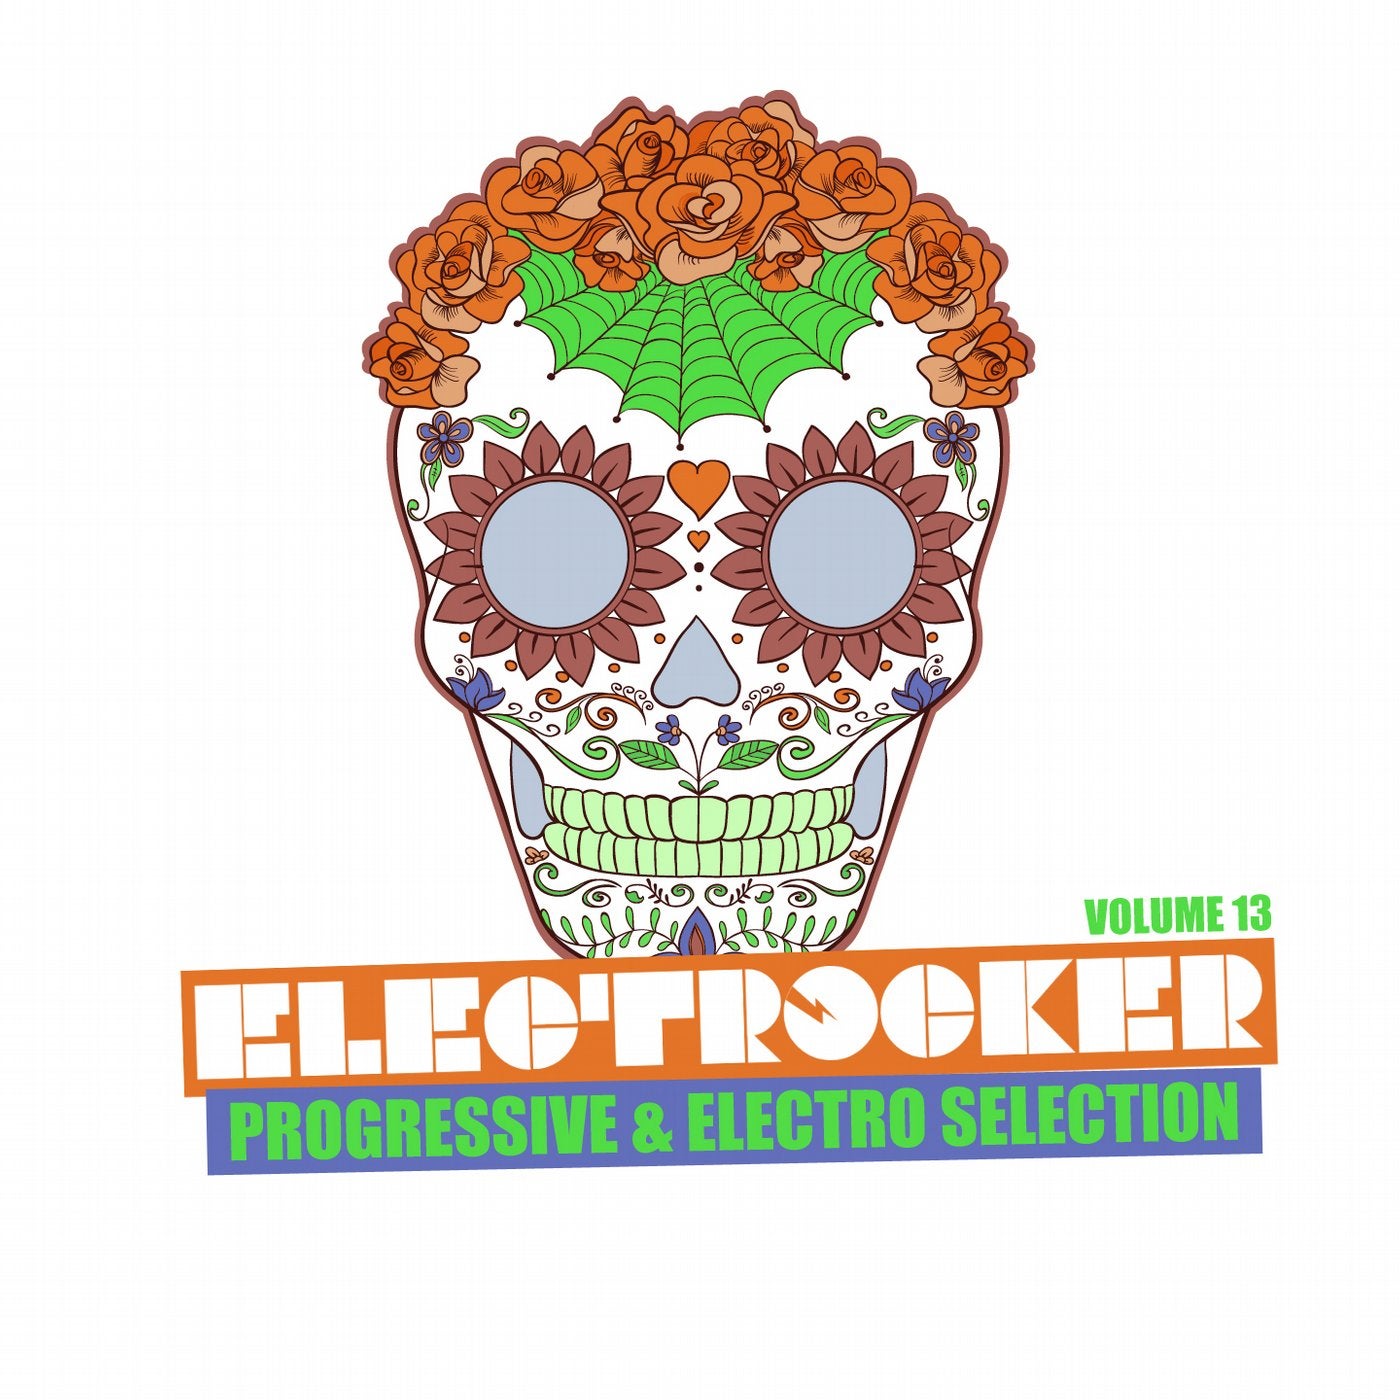 Electrocker - Progressive & Electro Selection Vol. 13